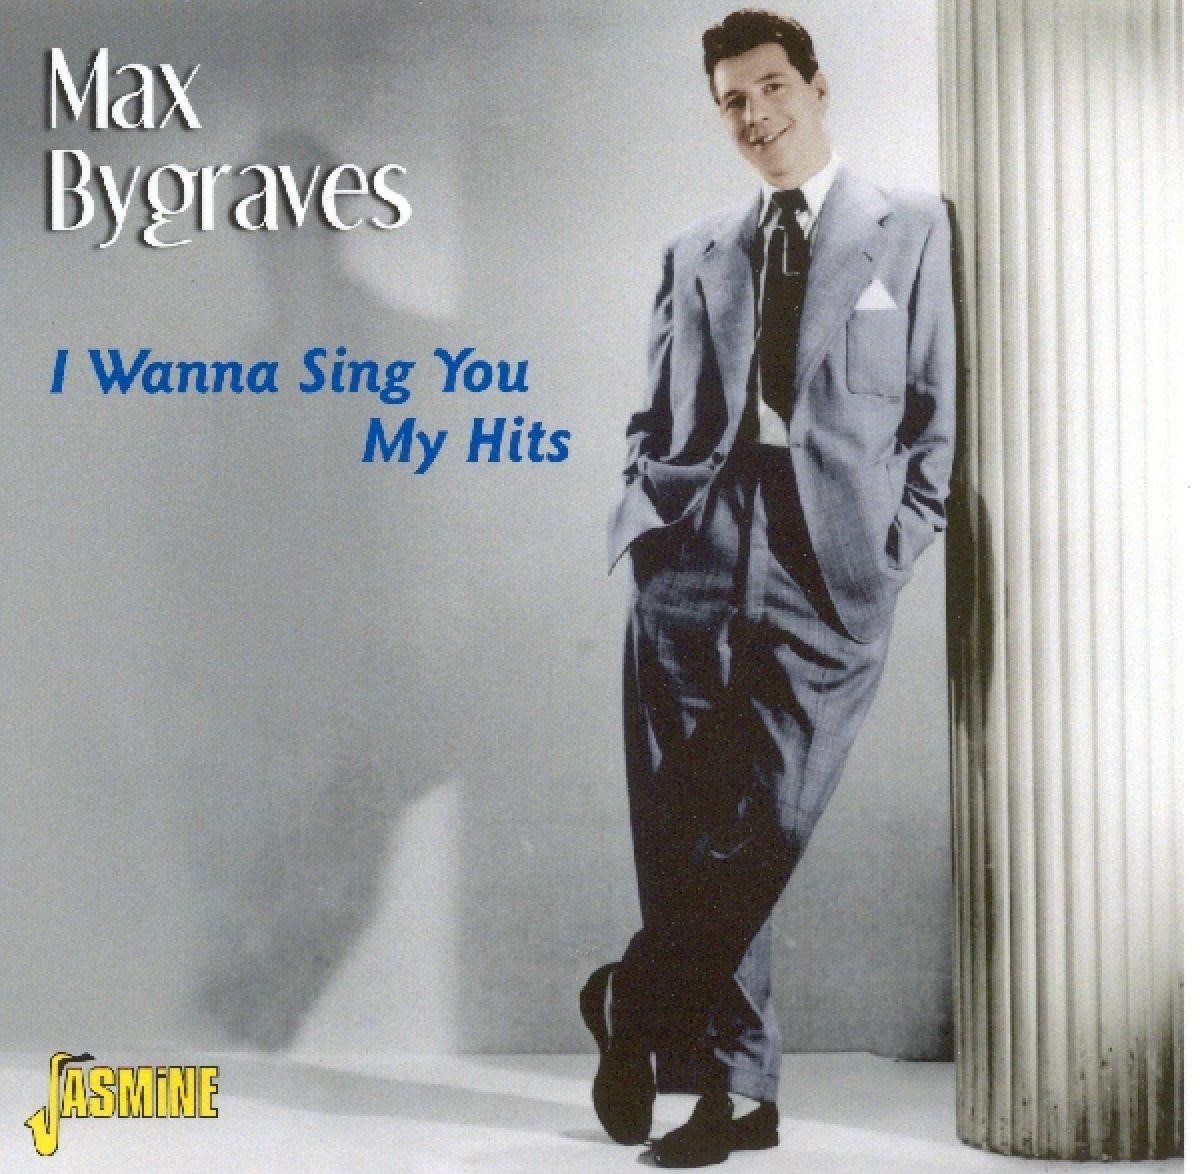 Max Bygraves - I Wanna Sing You My Hits (CD) - Max Bygraves